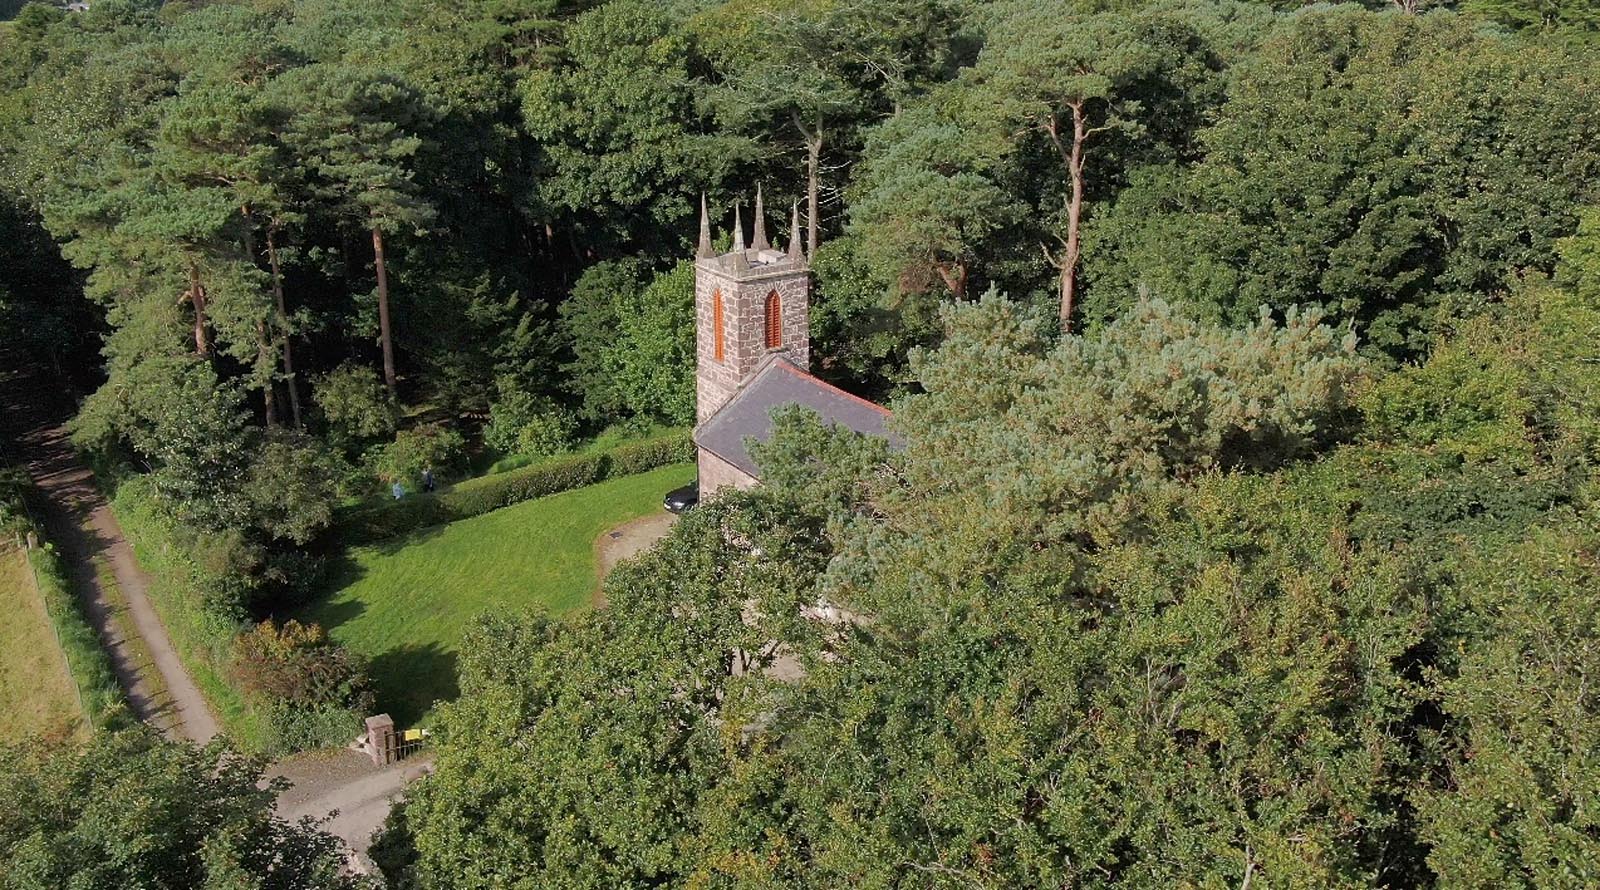 Aerial drone photography and video production services Dublin and Ireland portfolio - screenshot 11 of Glendun to Cushendun video